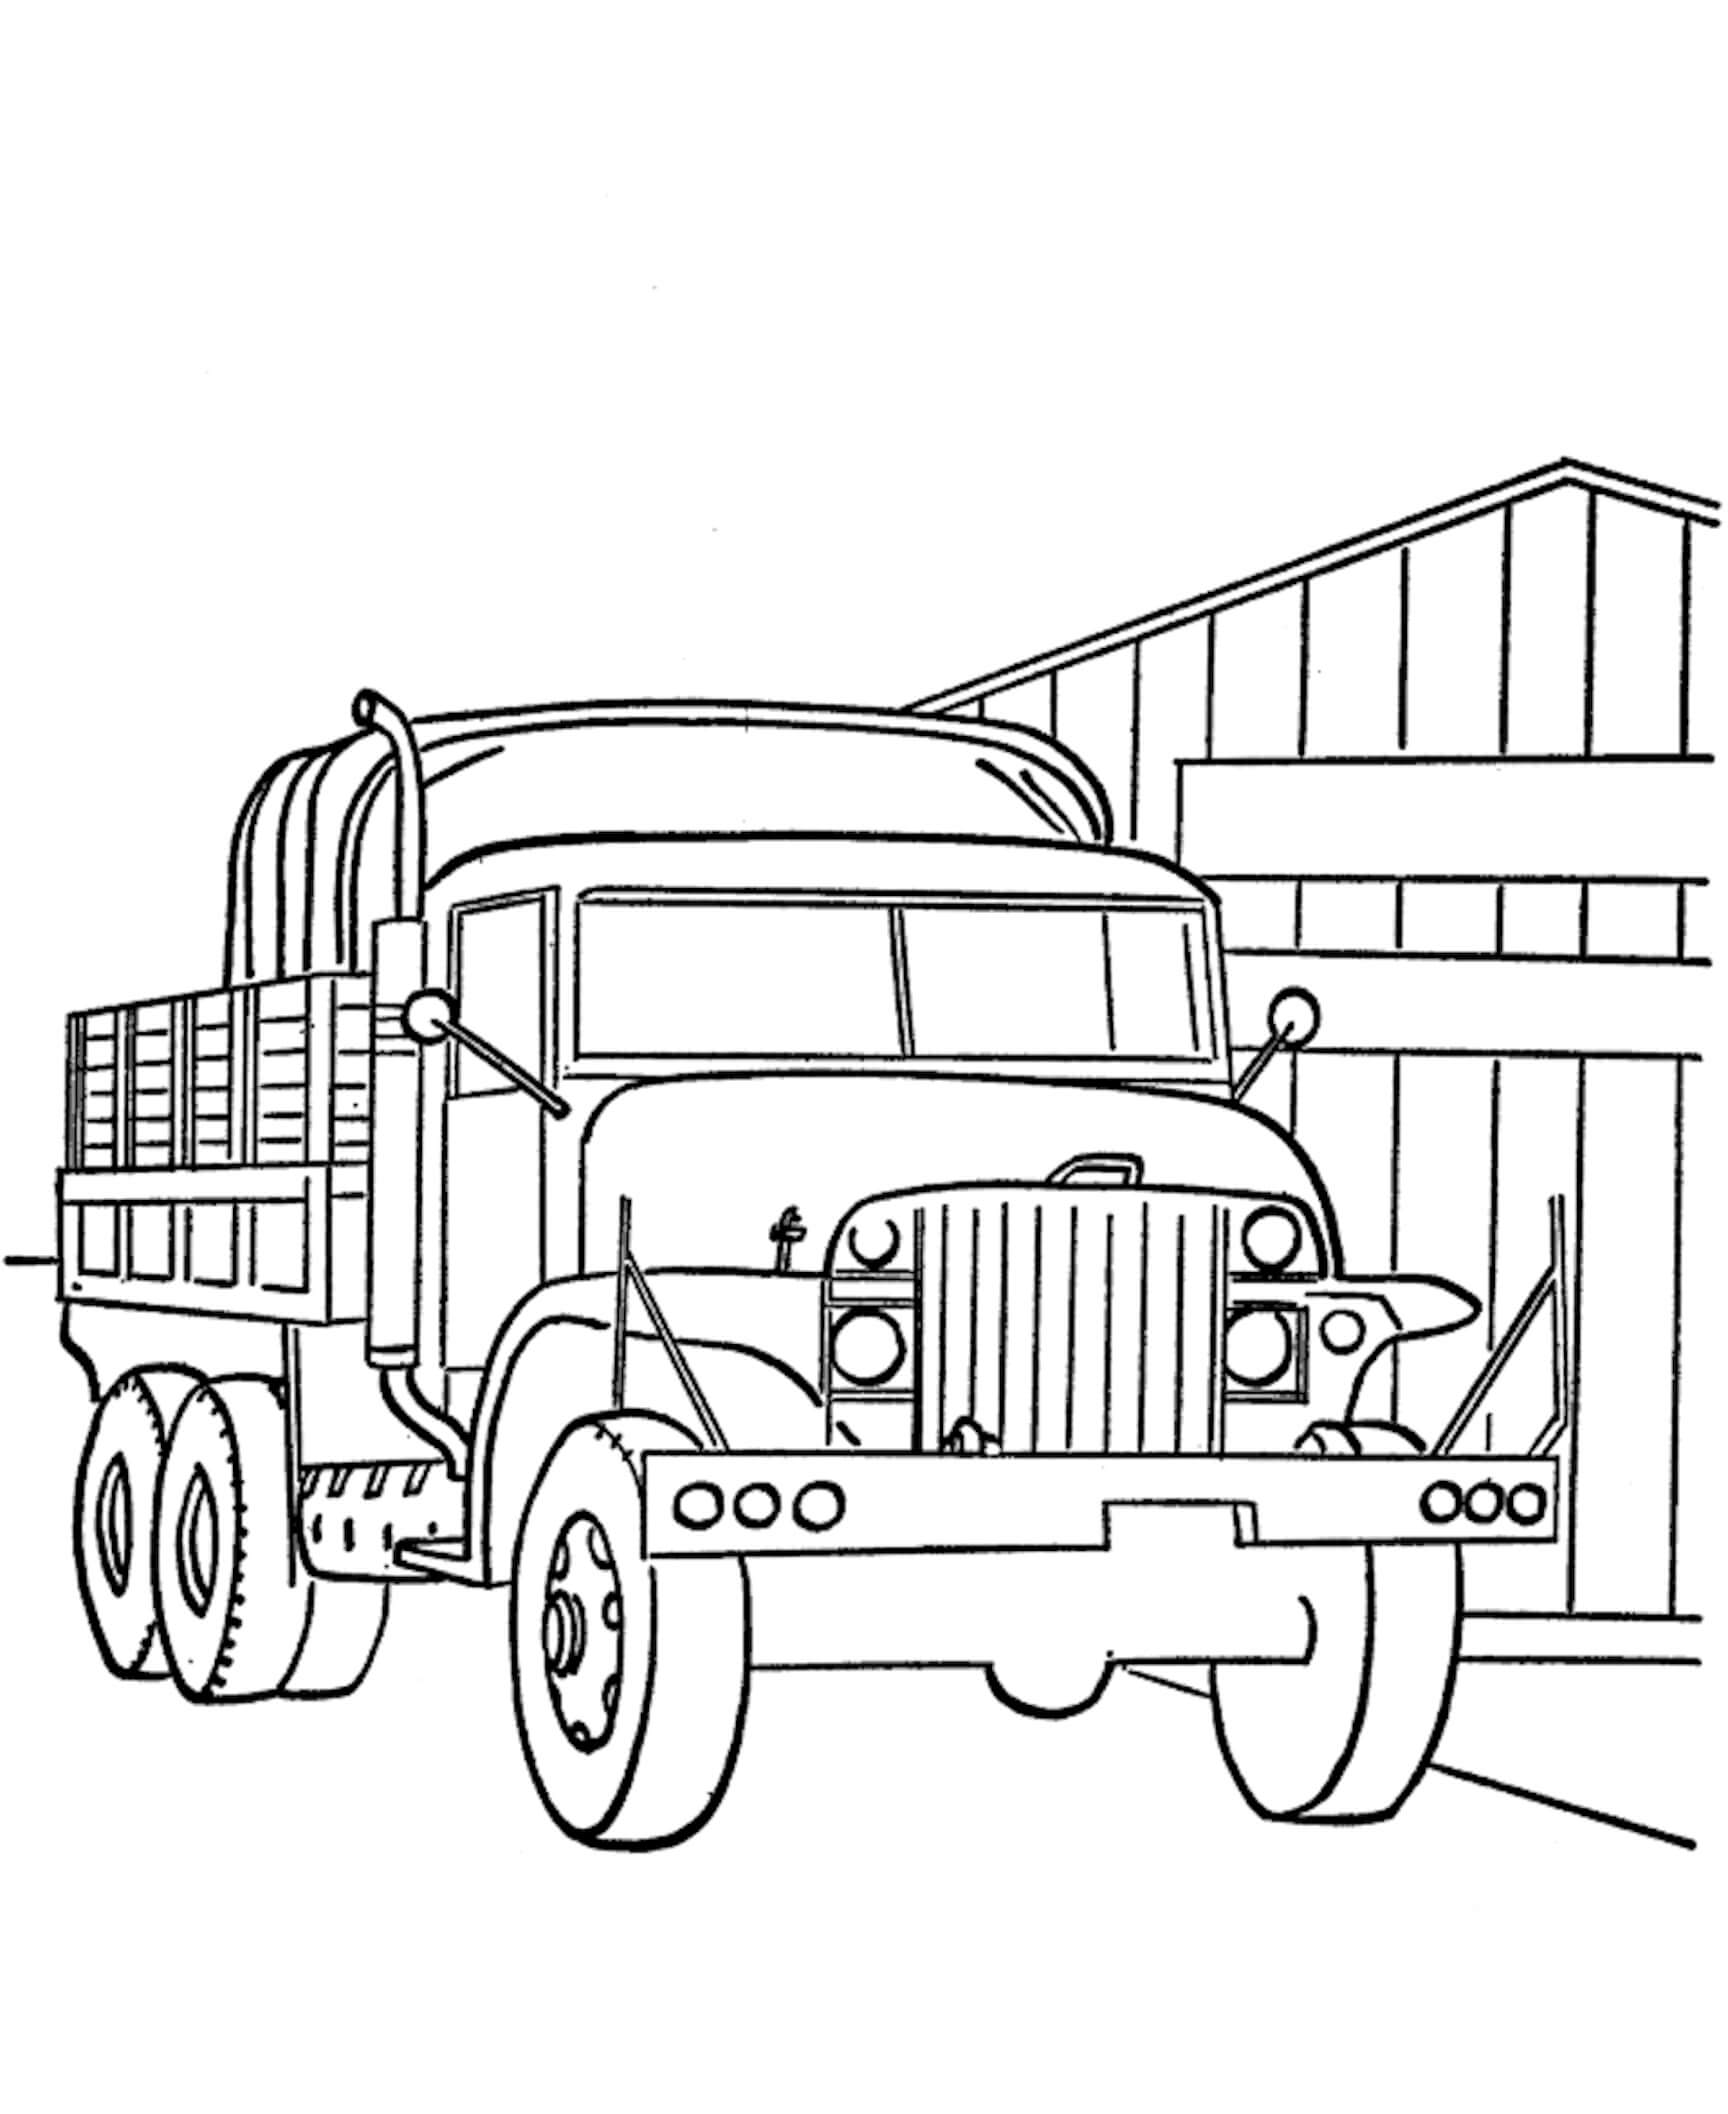 Un Camion coloring page